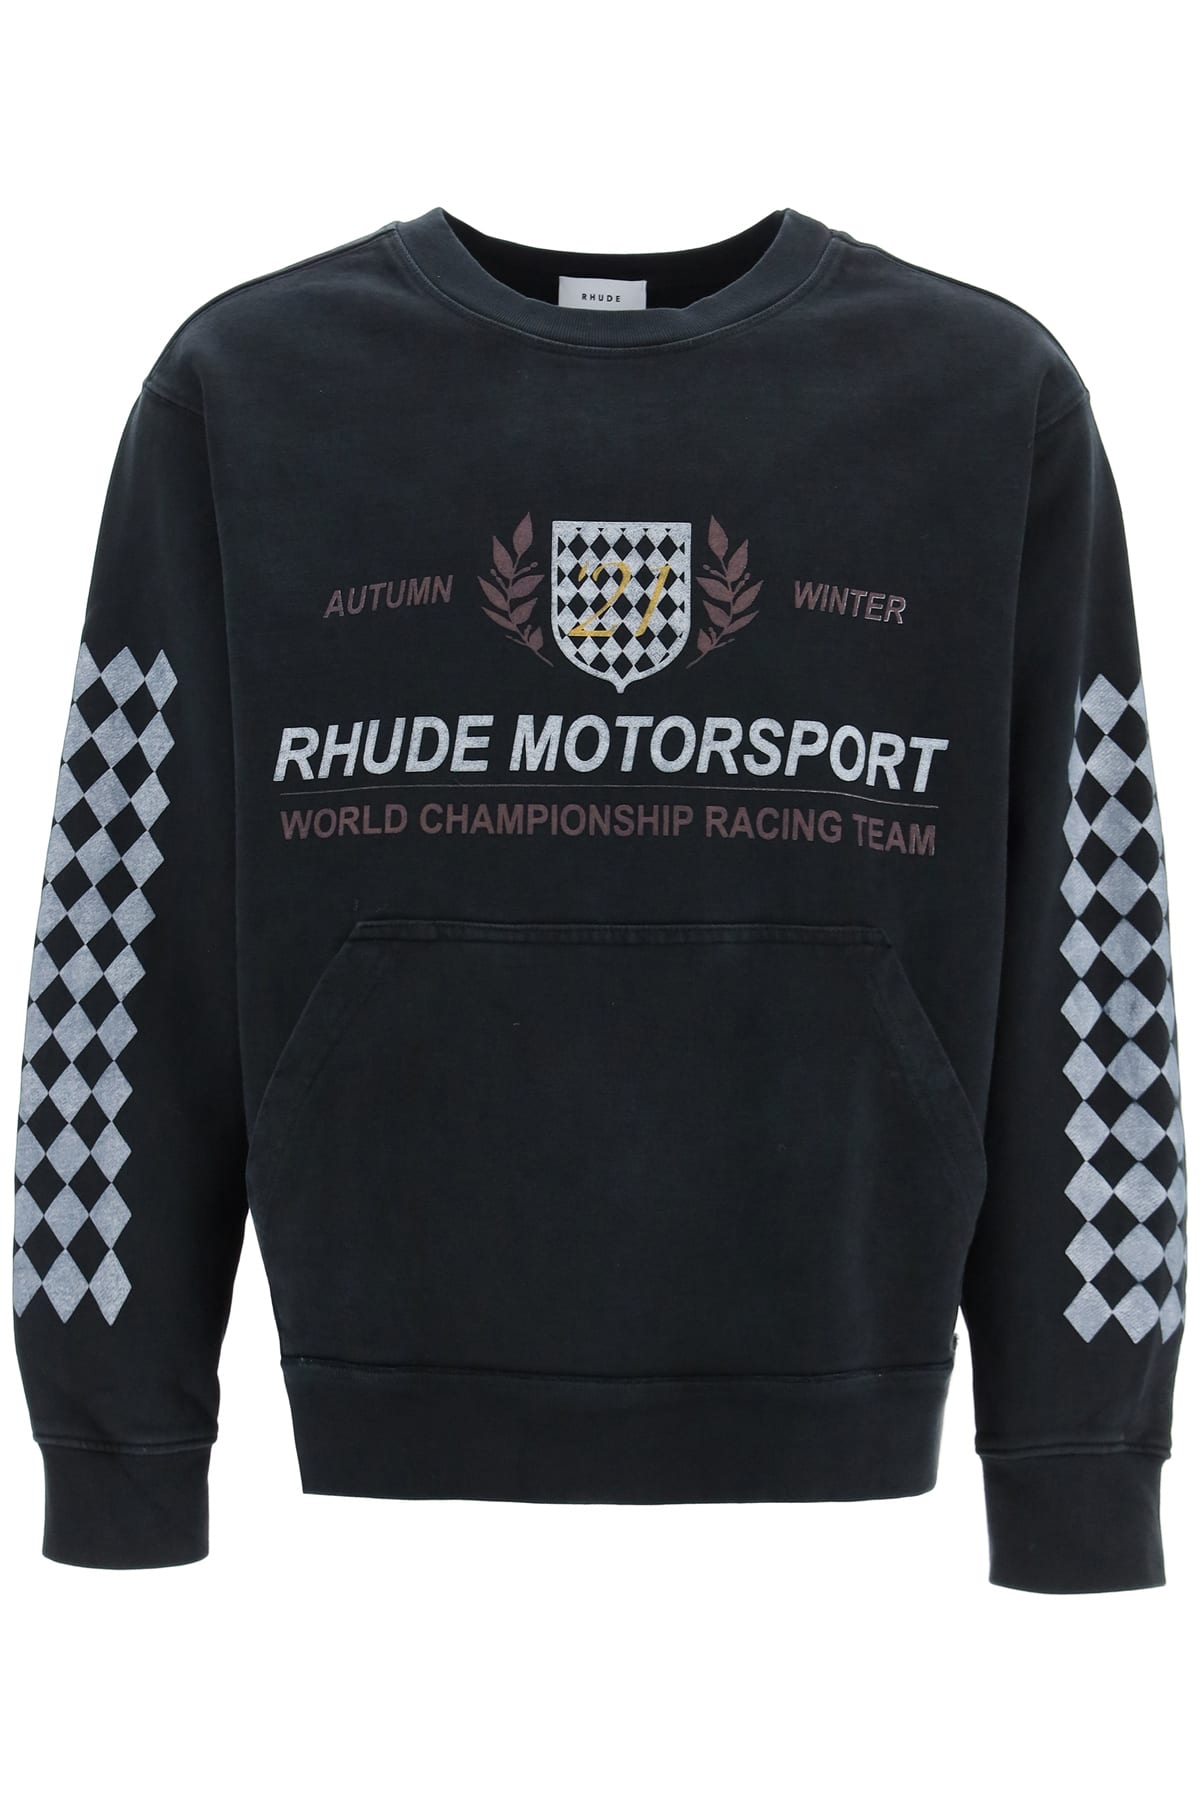 Rhude Motor Crest Print Sweatshirt